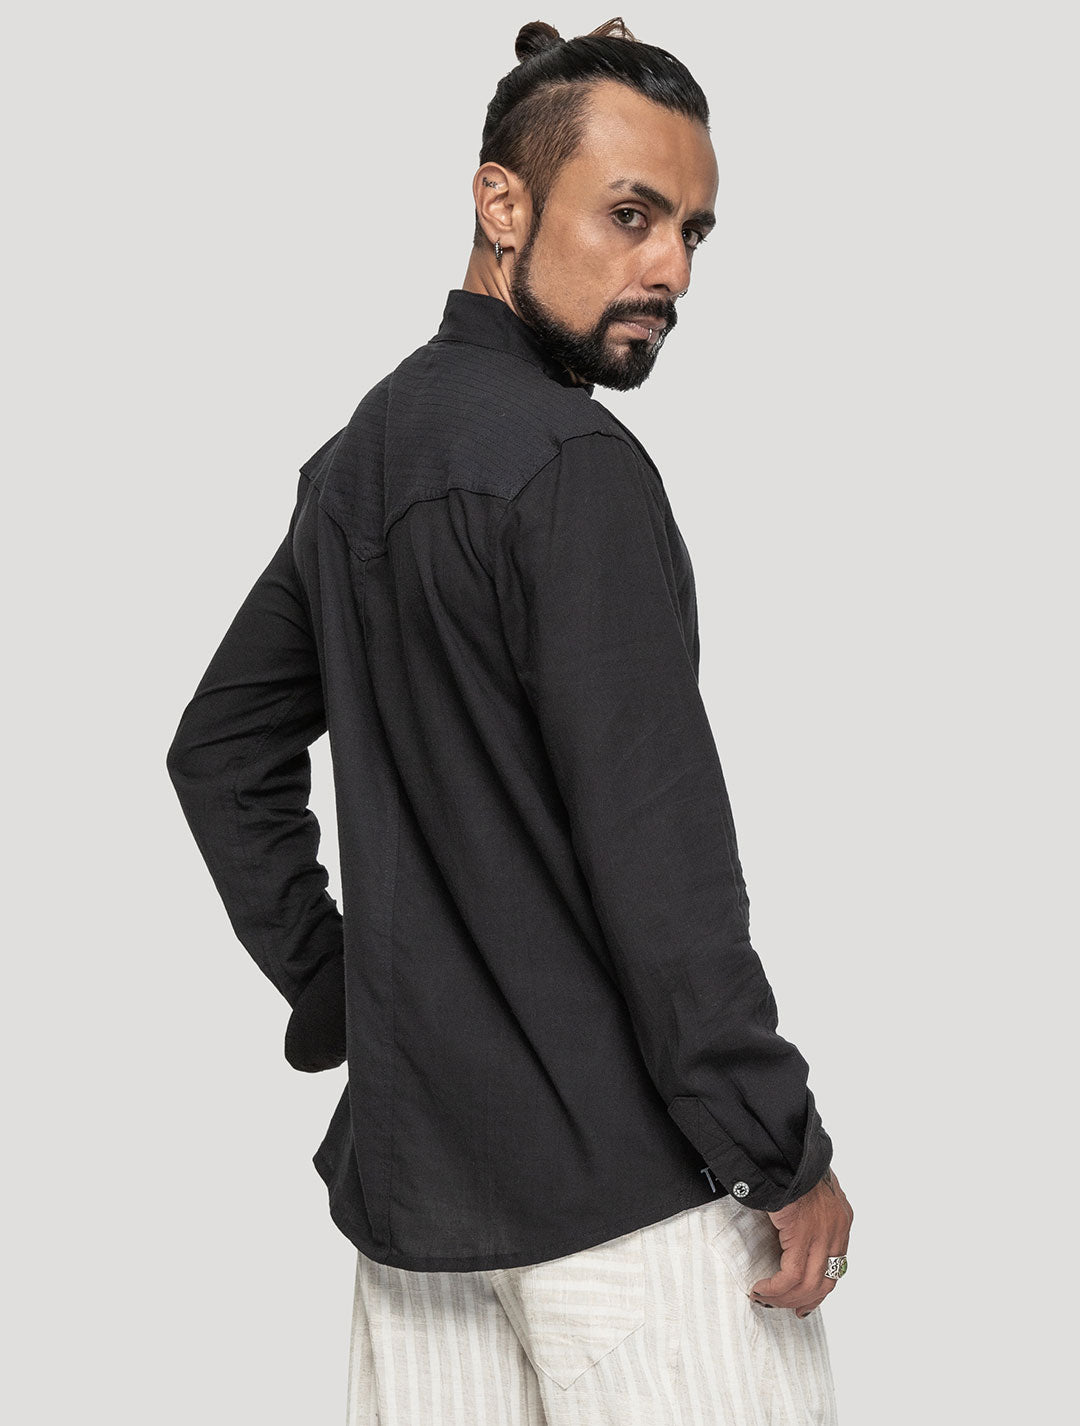 Black 'Tyr RMX' Long Sleeves Shirt - Psylo Fashion